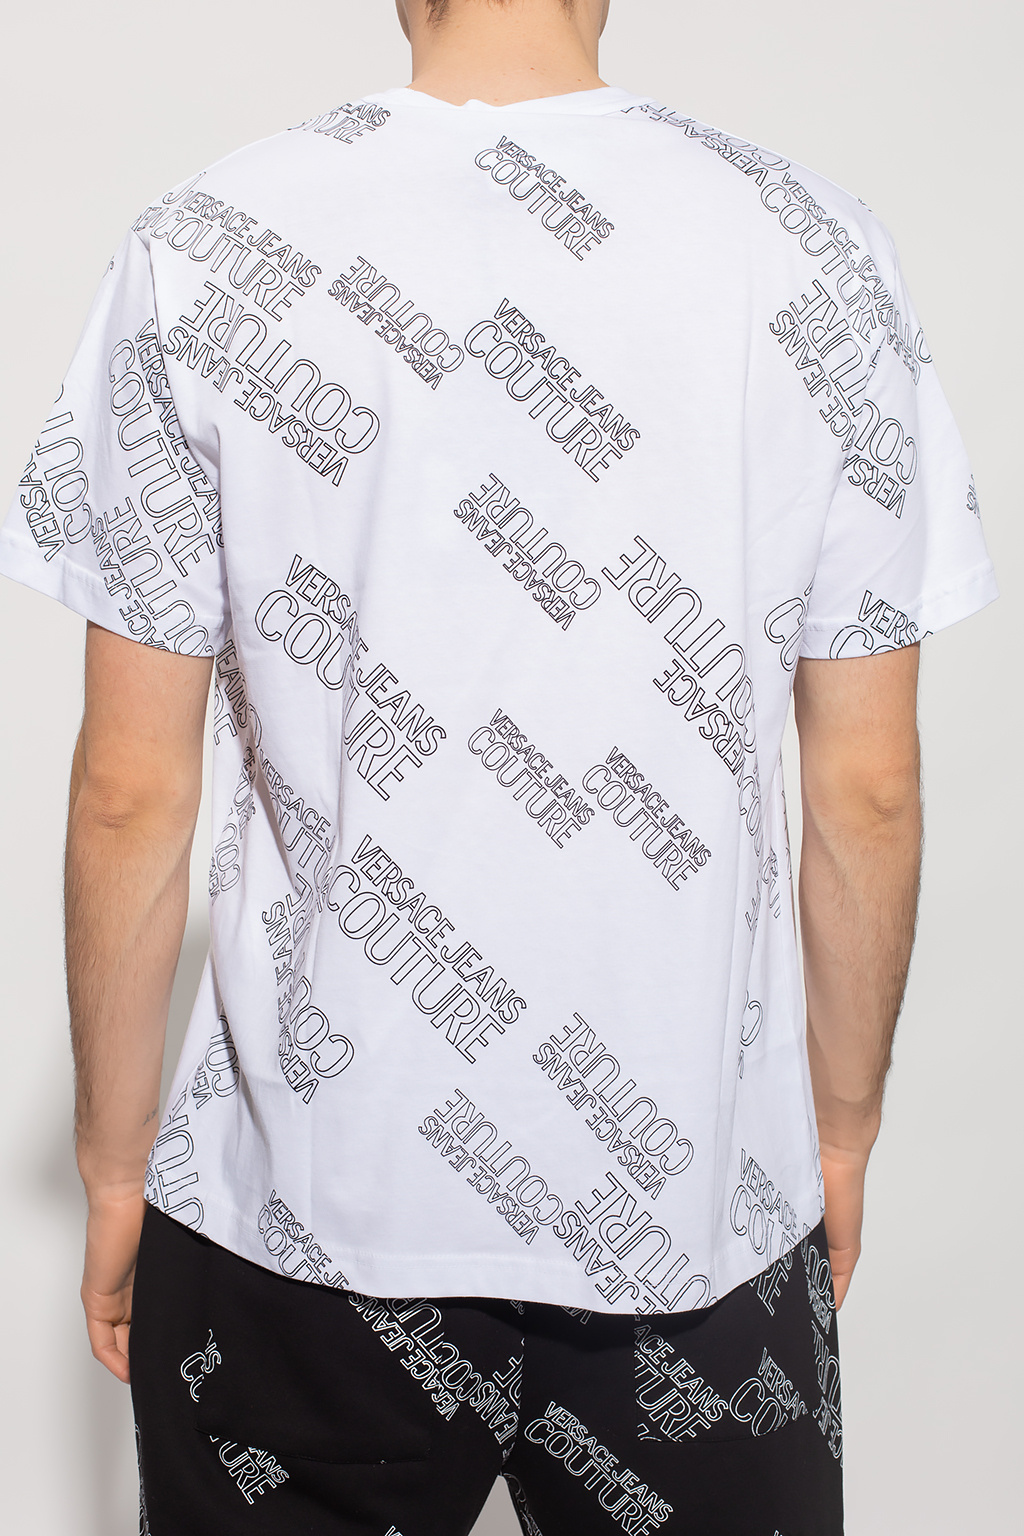 Superdry Black Allstars Graphic Ringer T-Shirt Craghoppers NosiLife Shelby 3 4 Ærme T-shirt Renoveret